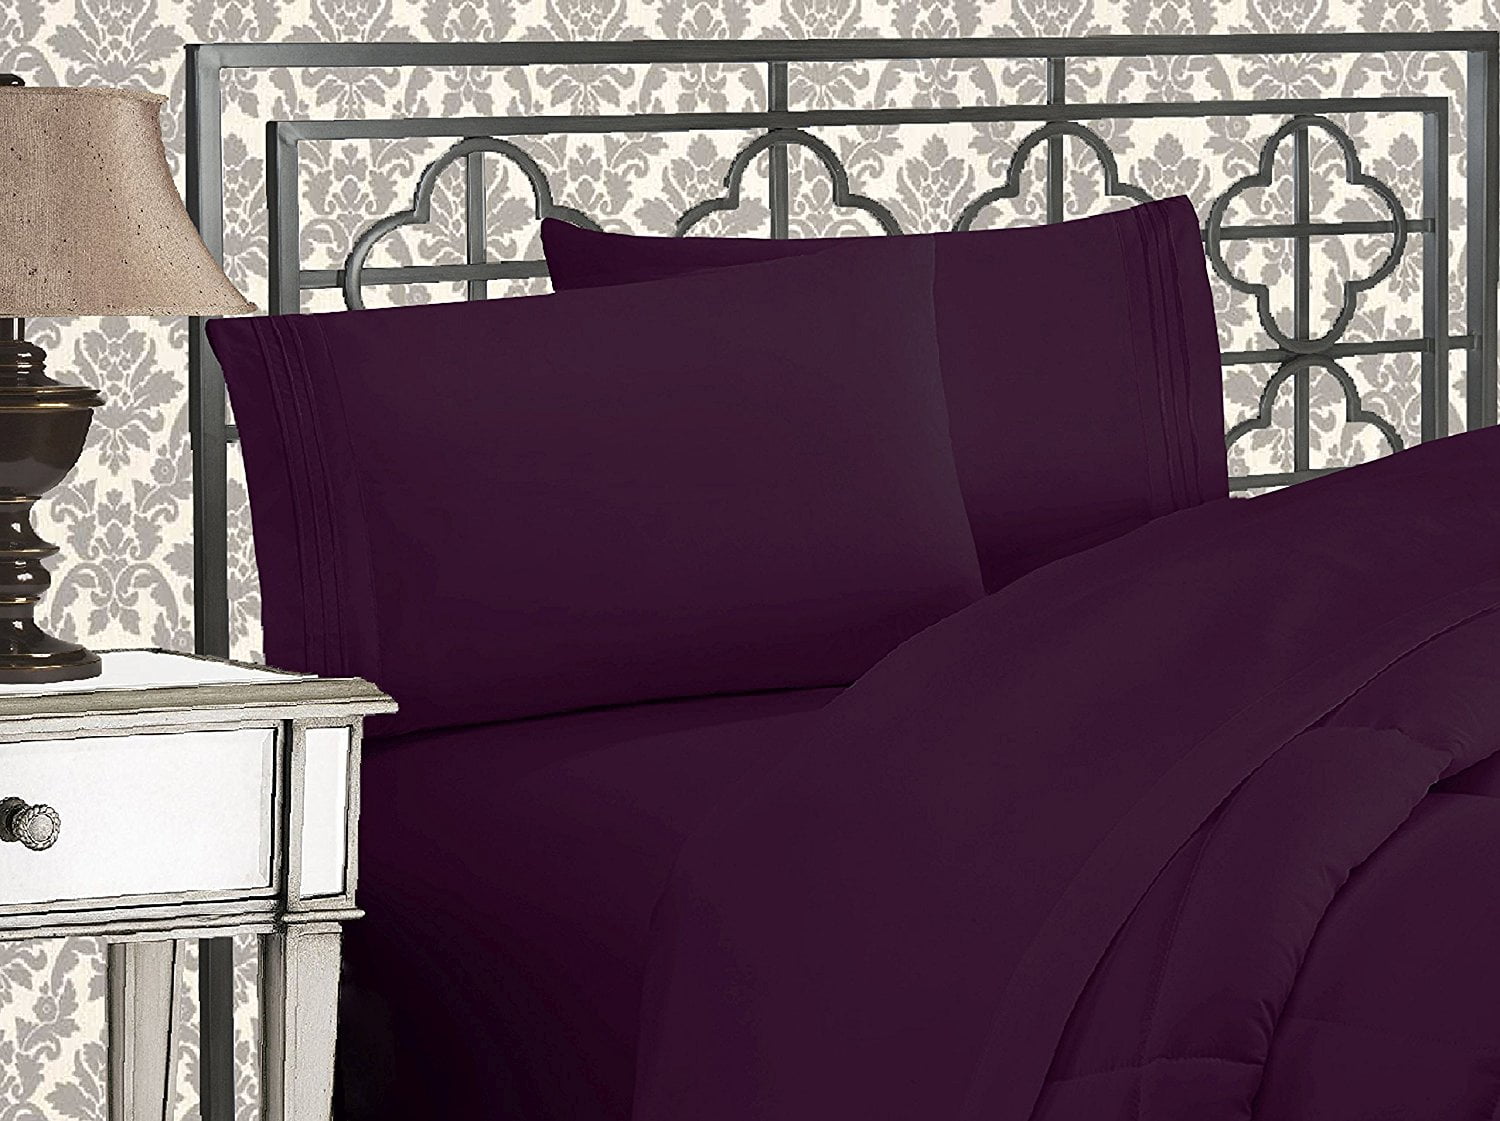 Lavender Clara Clark 1800 Series Silky Soft 4 Piece Bed Sheet Set Full Size